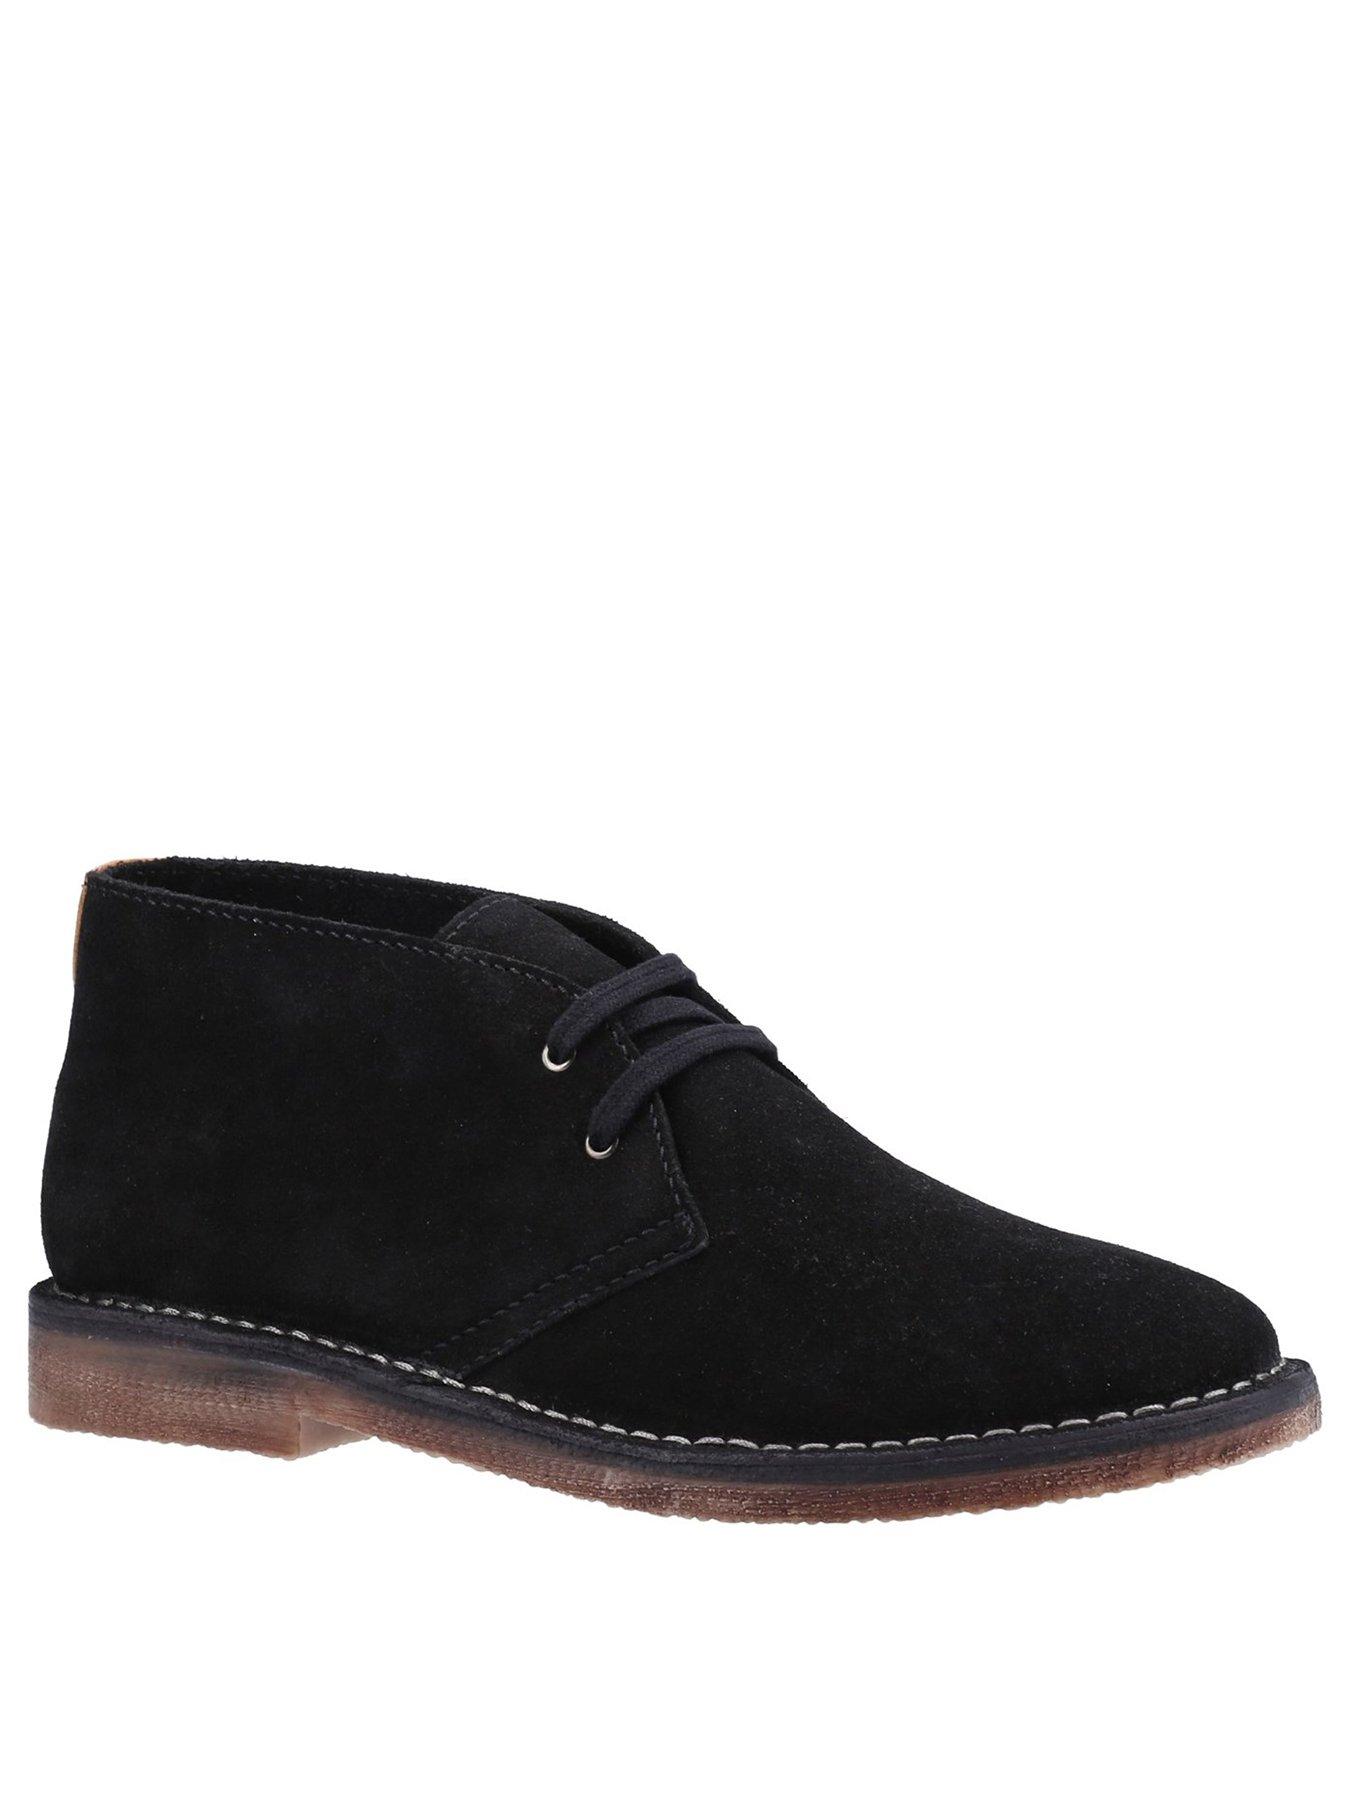 Shoes & boots Samuel Suede Boot - Black